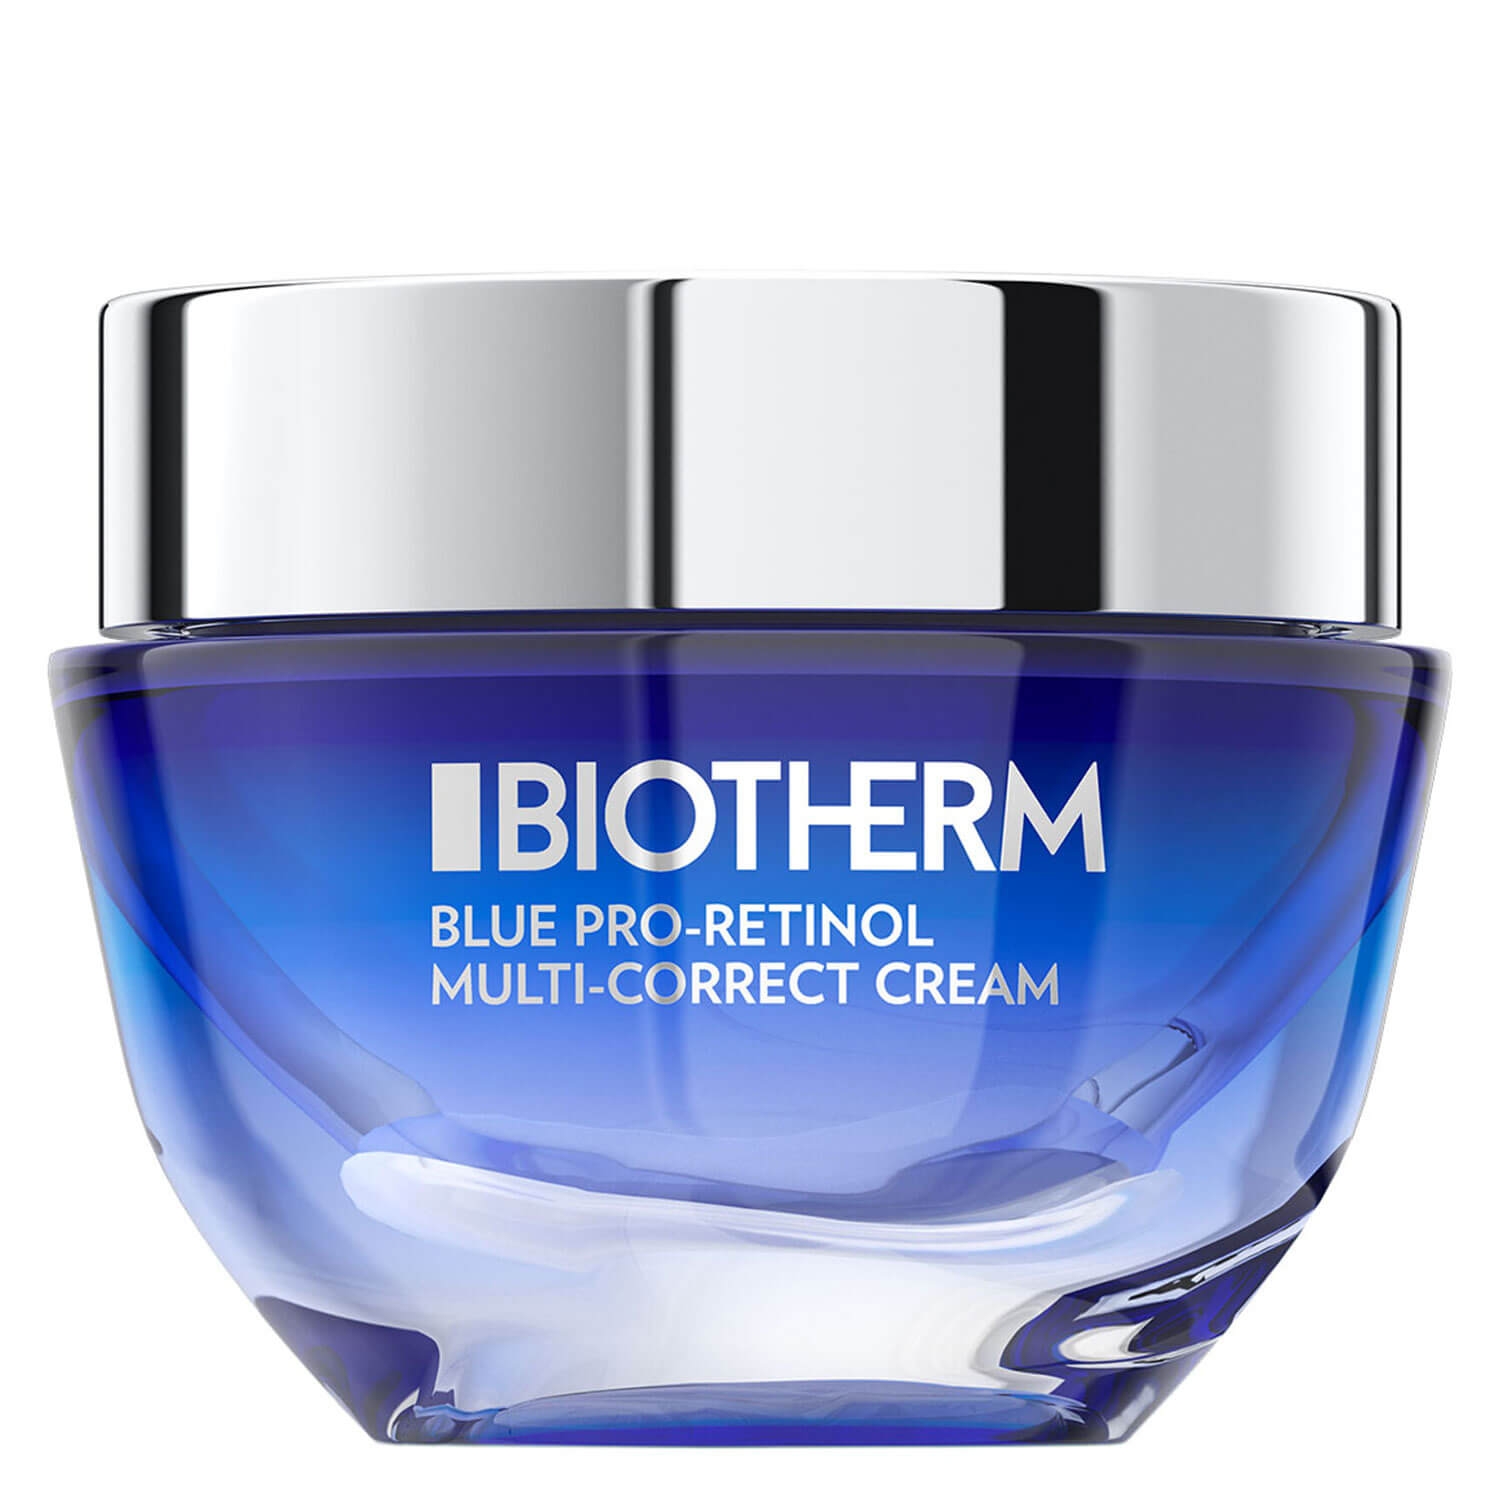 Produktbild von Blue Therapy - Blue Pro-Retinol Multi-Correct Cream